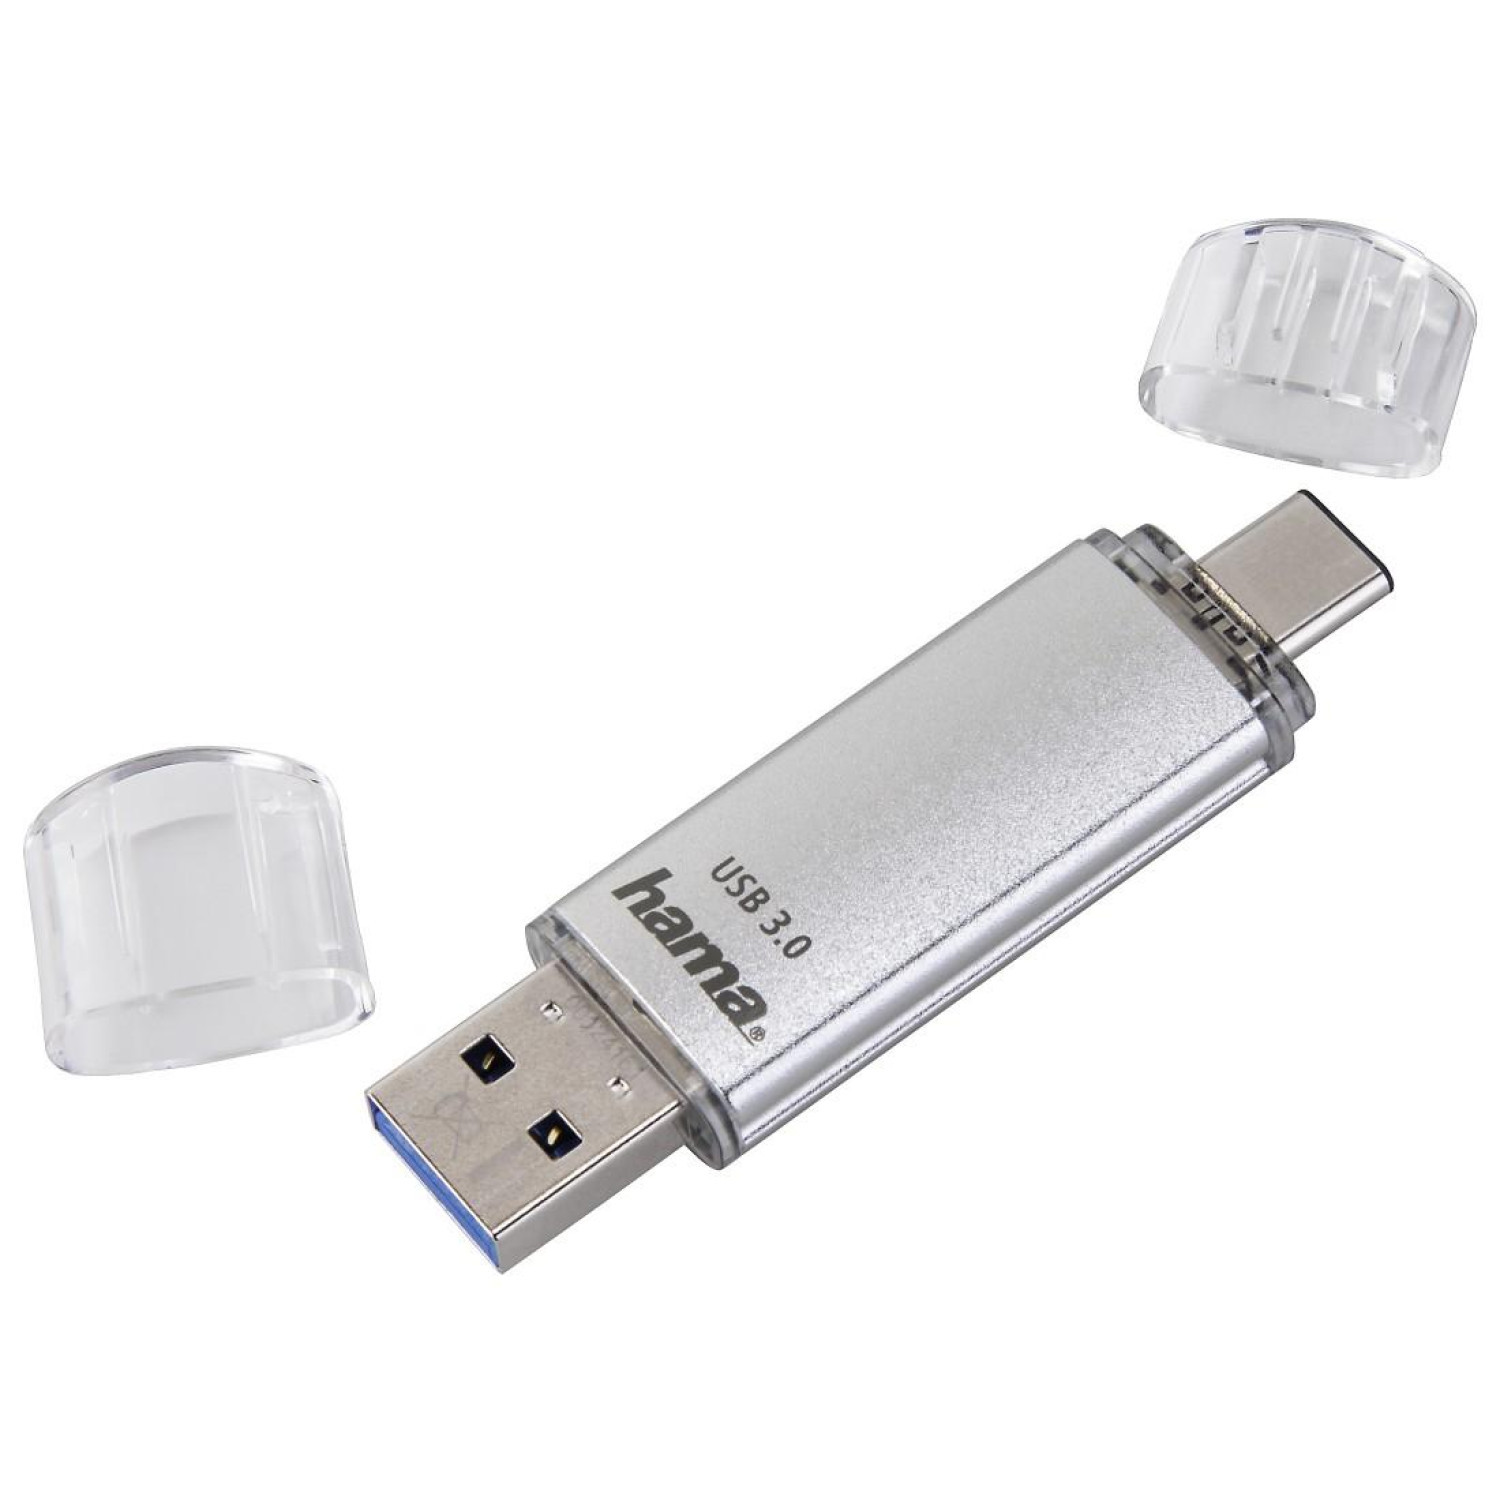 USB памет HAMA Тип USB-C Laeta 124163, 64GB, USB 3.1 Type-C, Сребрист